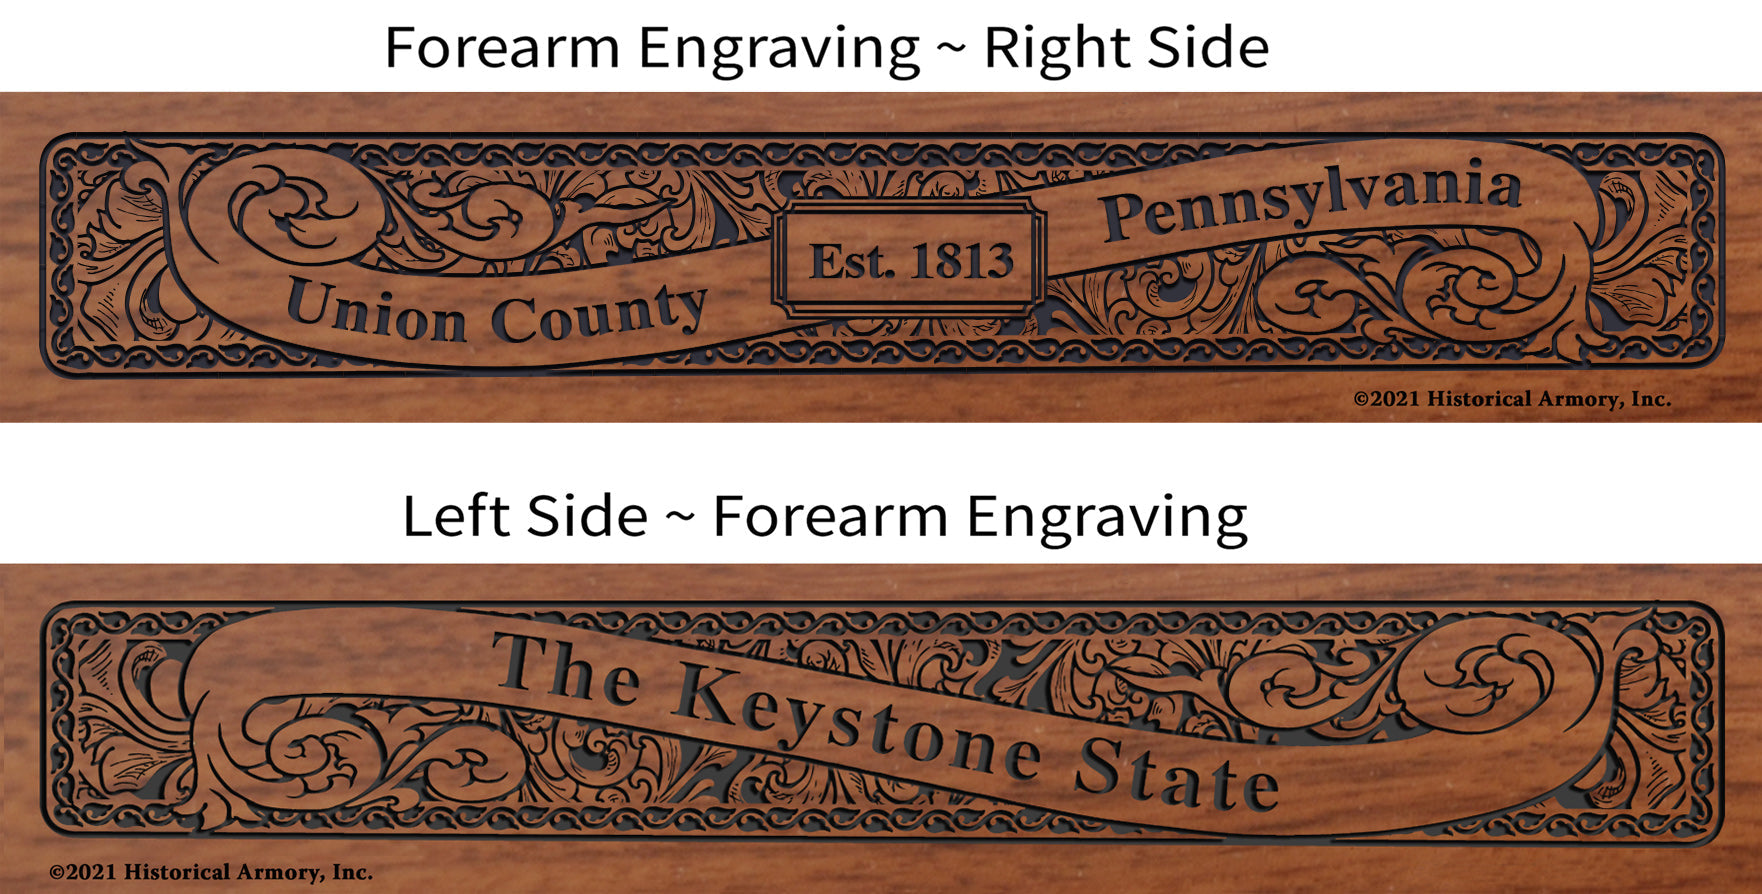 Union County Pennsylvania Engraved Rifle Forearm